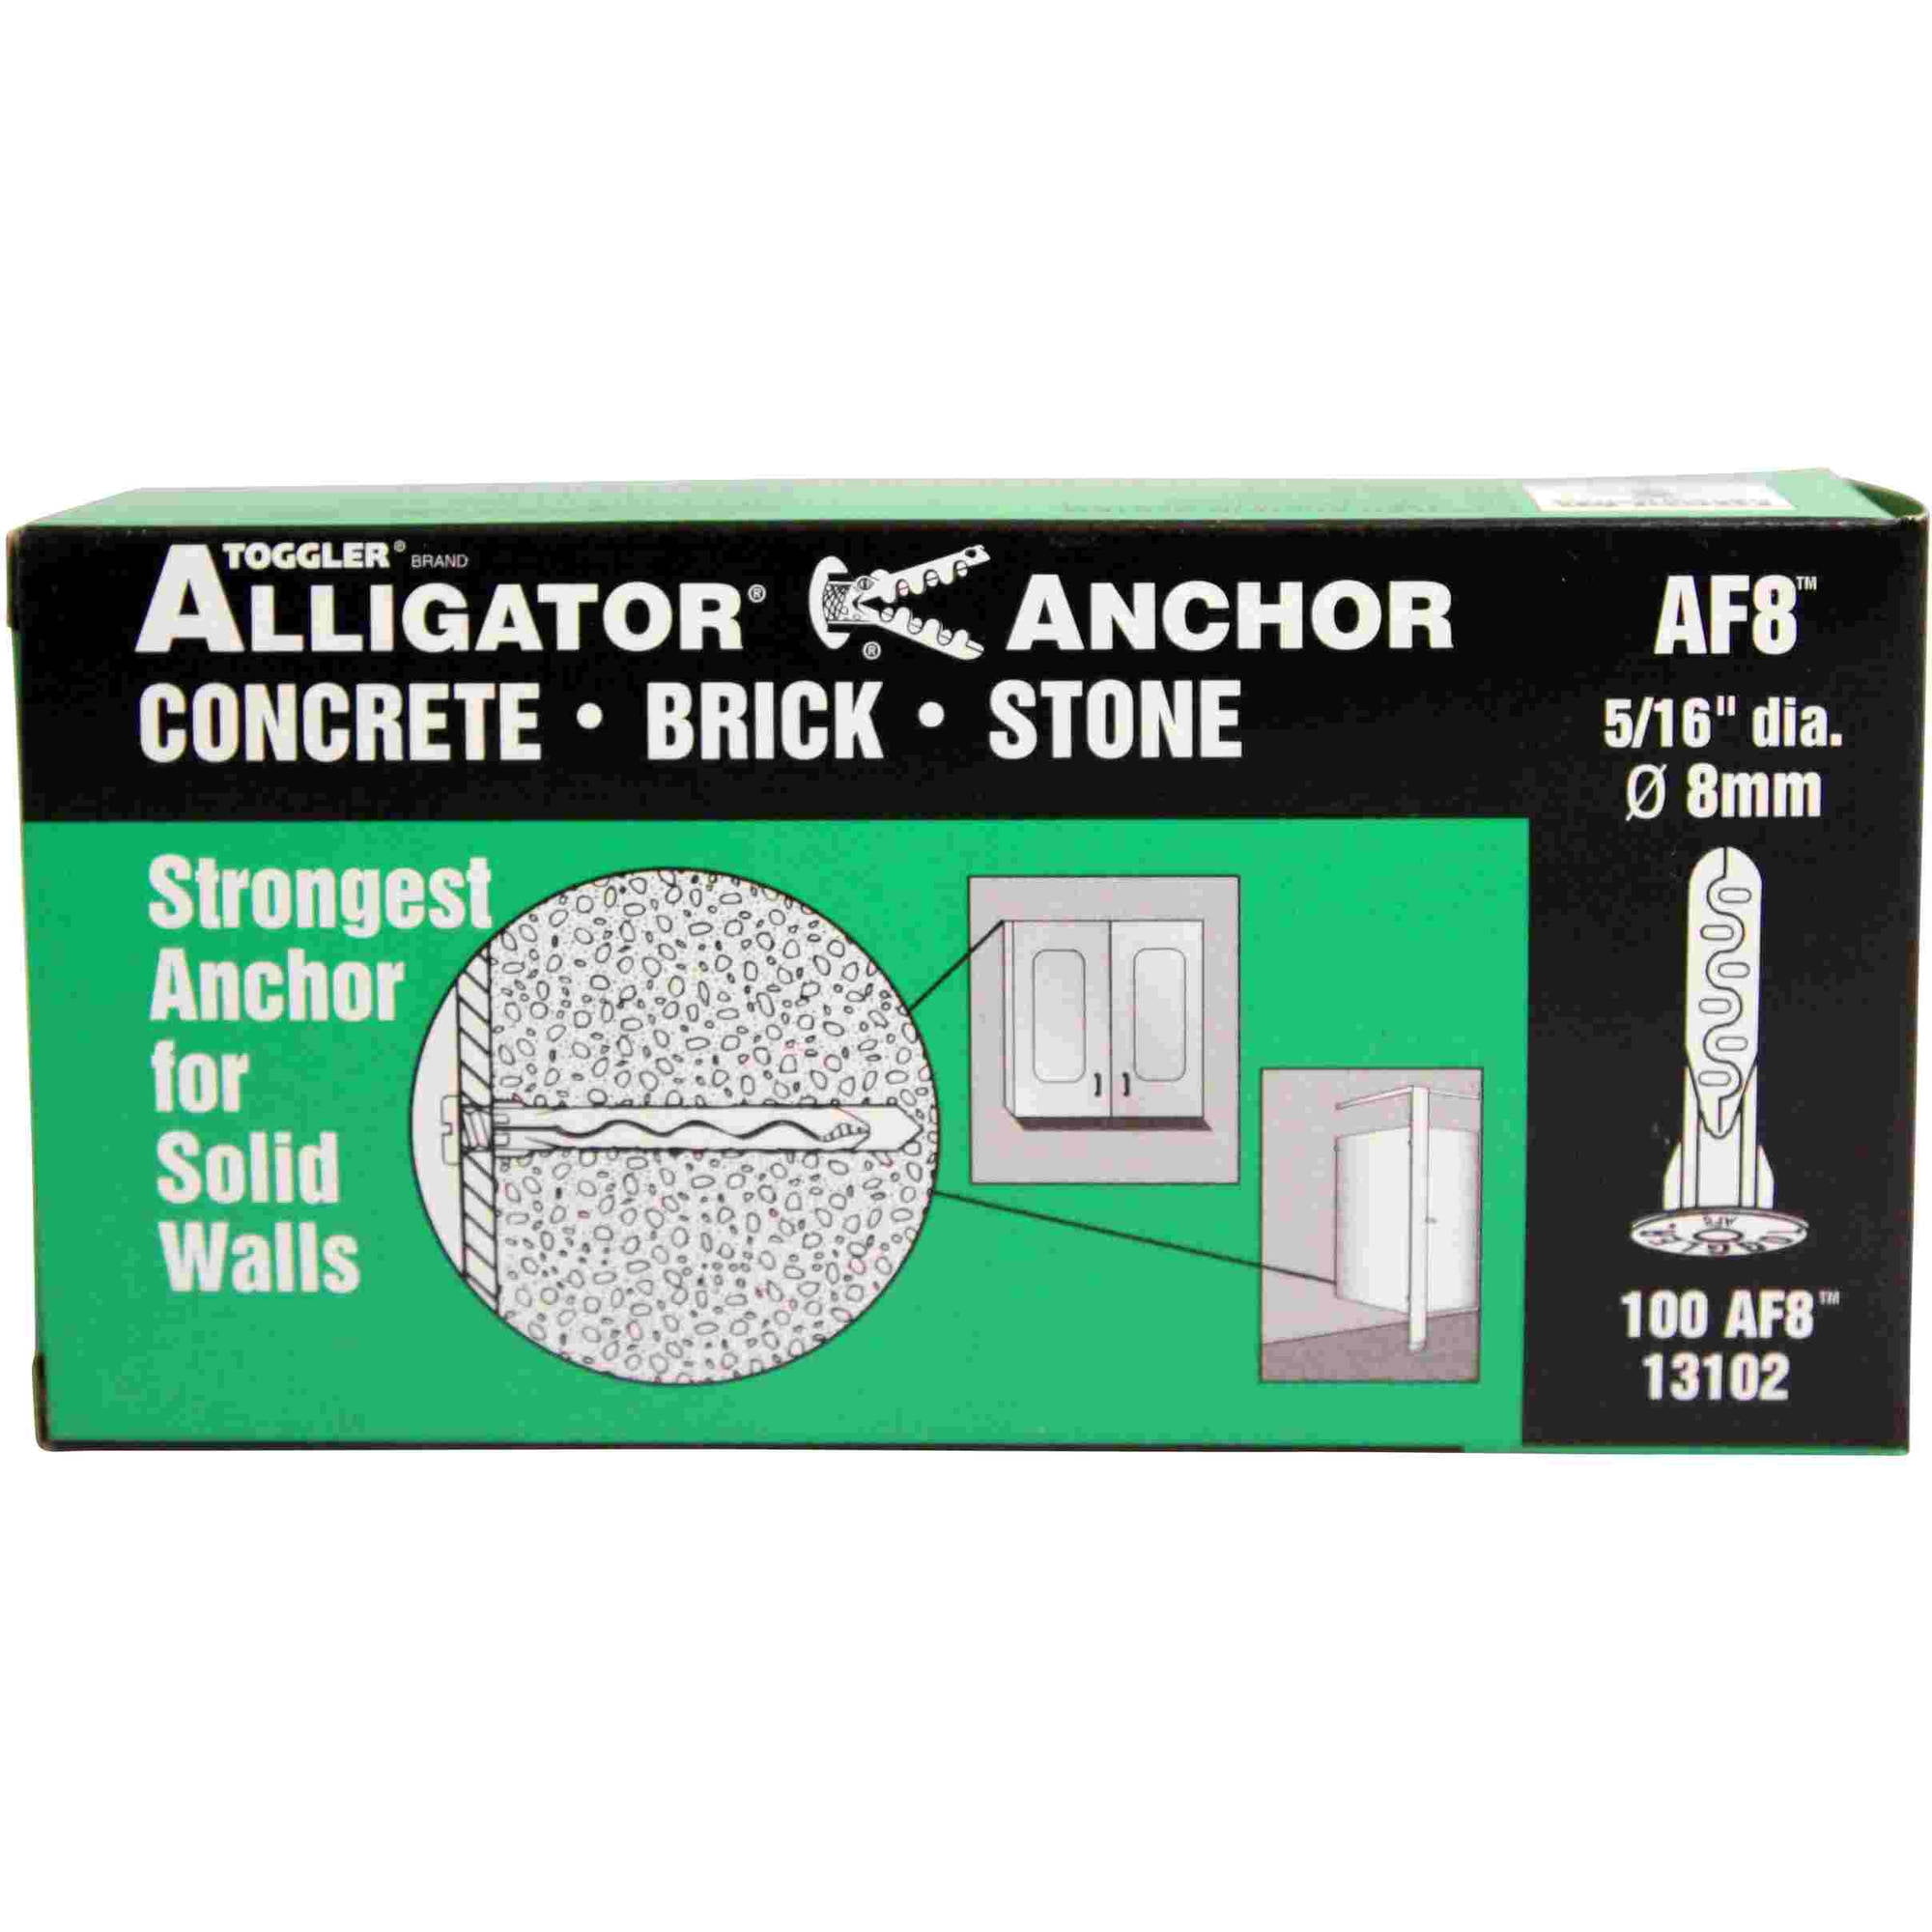 Toggler Alligator All Purpose Anchors, Af8Tm 100-Piece Box of 5/16